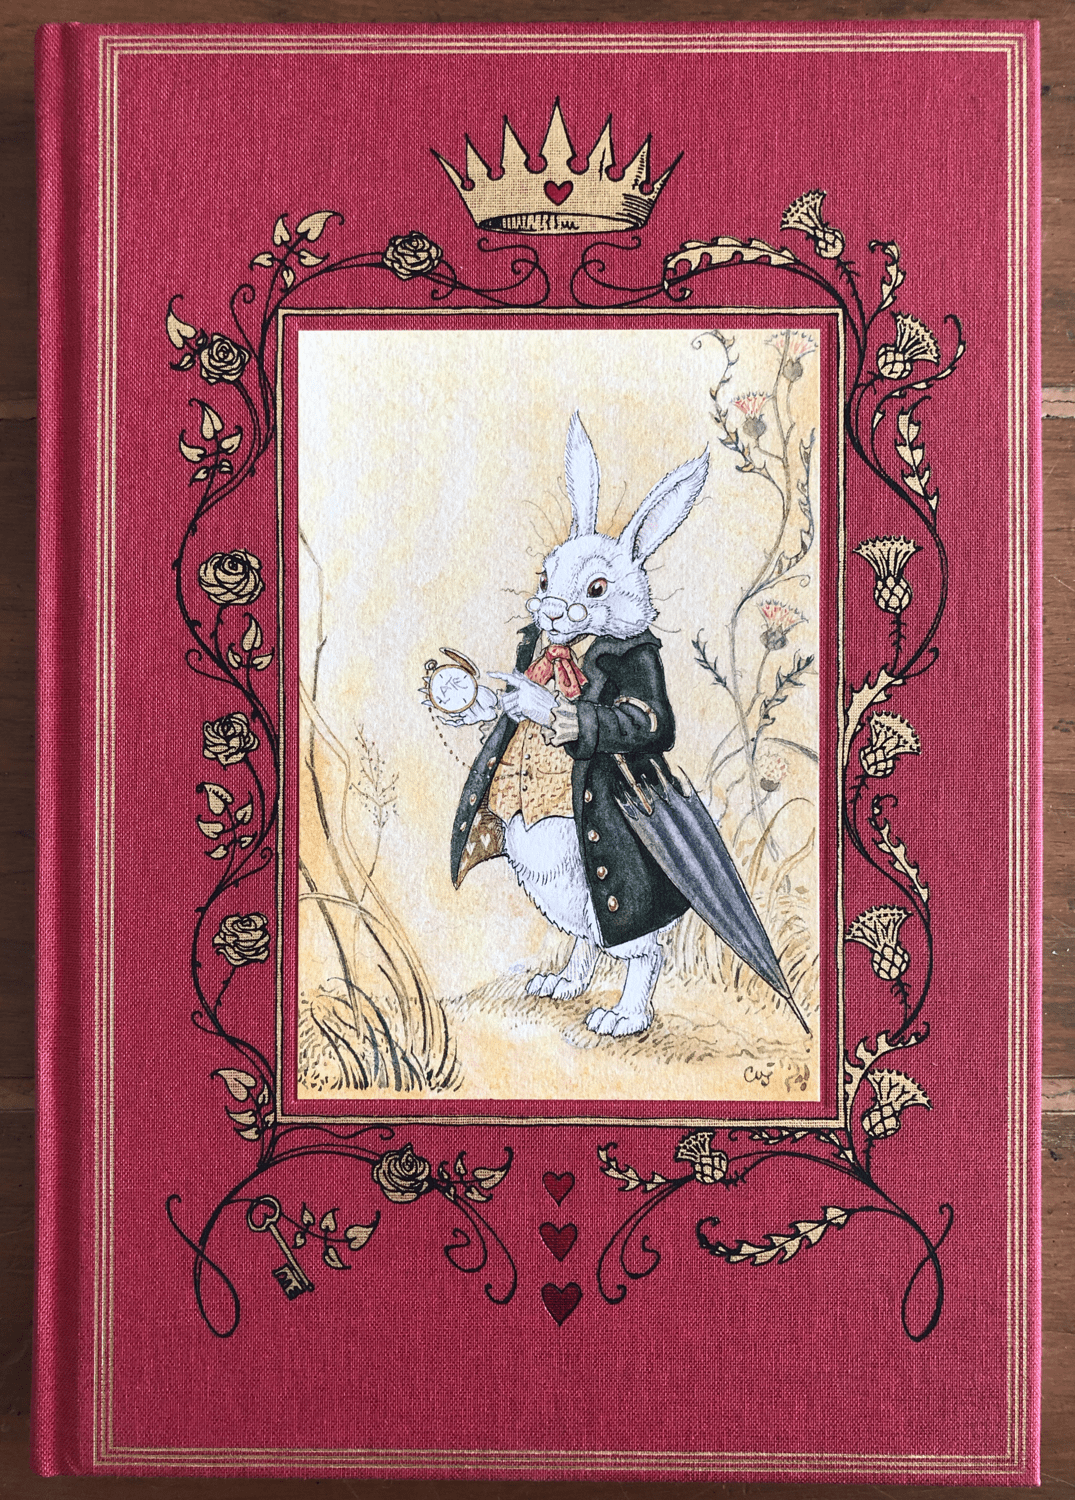 Alice in Wonderland Folio Society